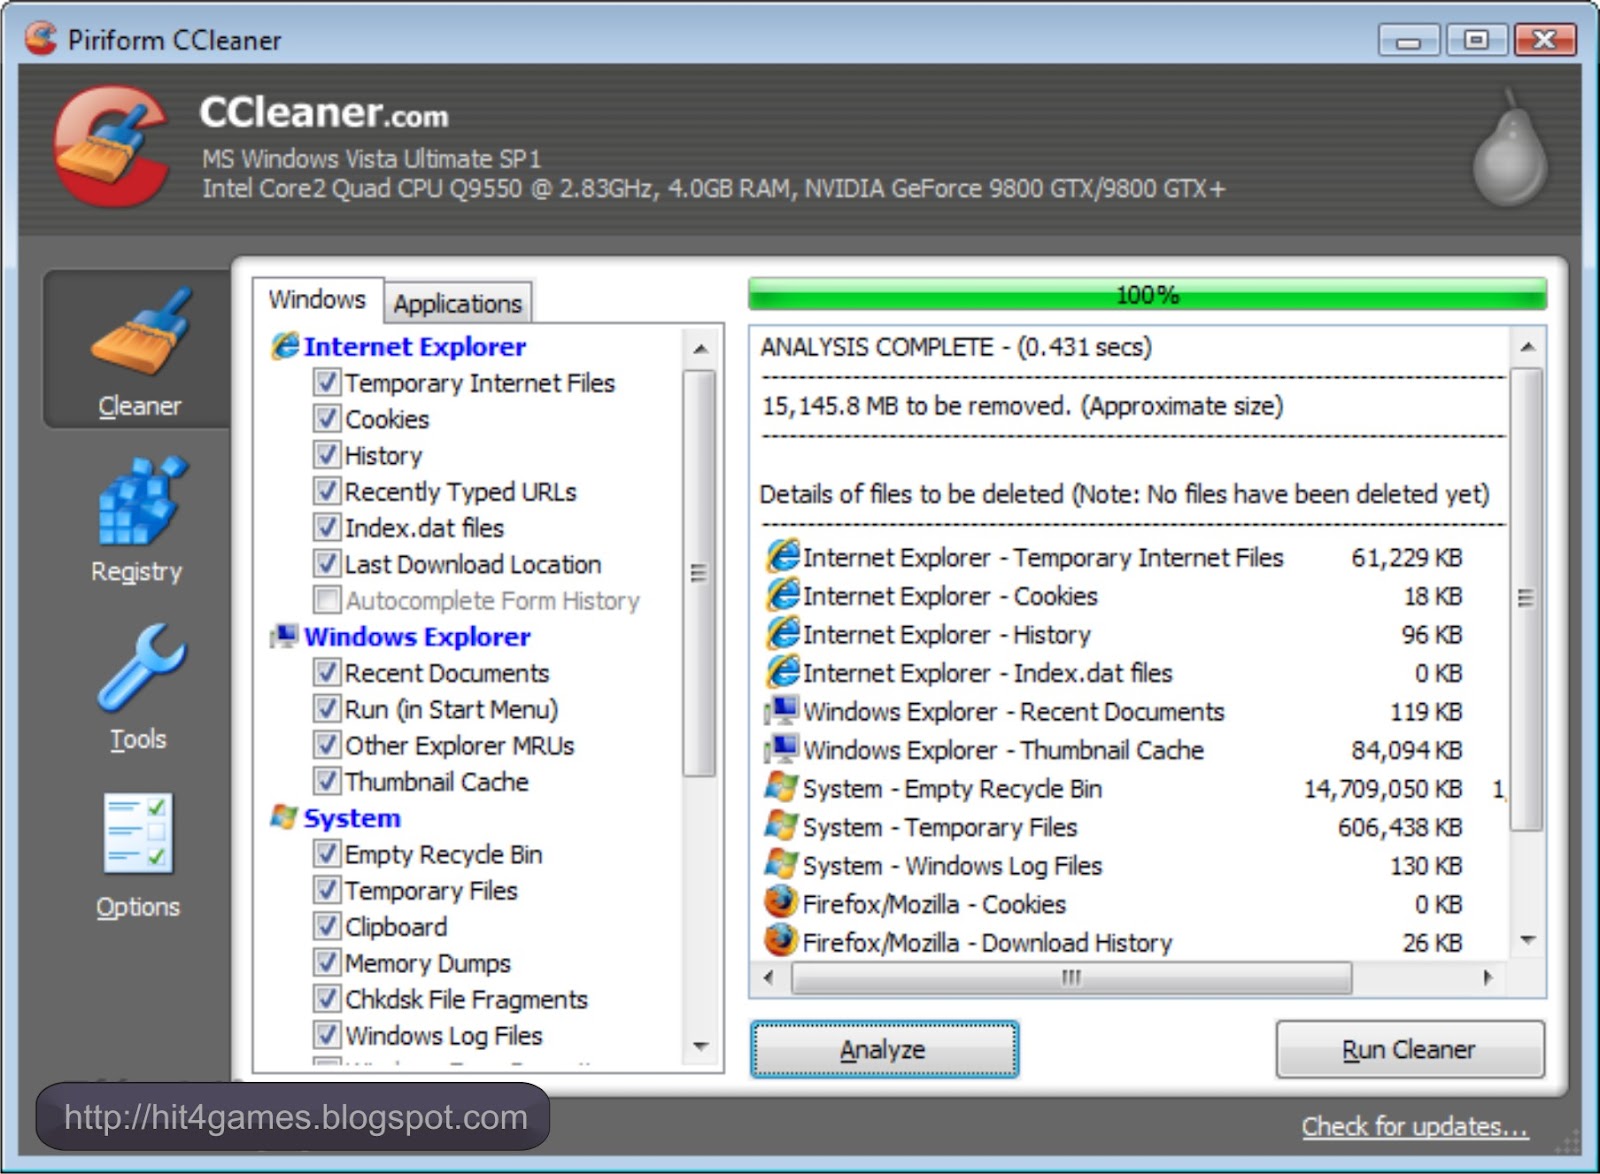 ccleaner download windows 10